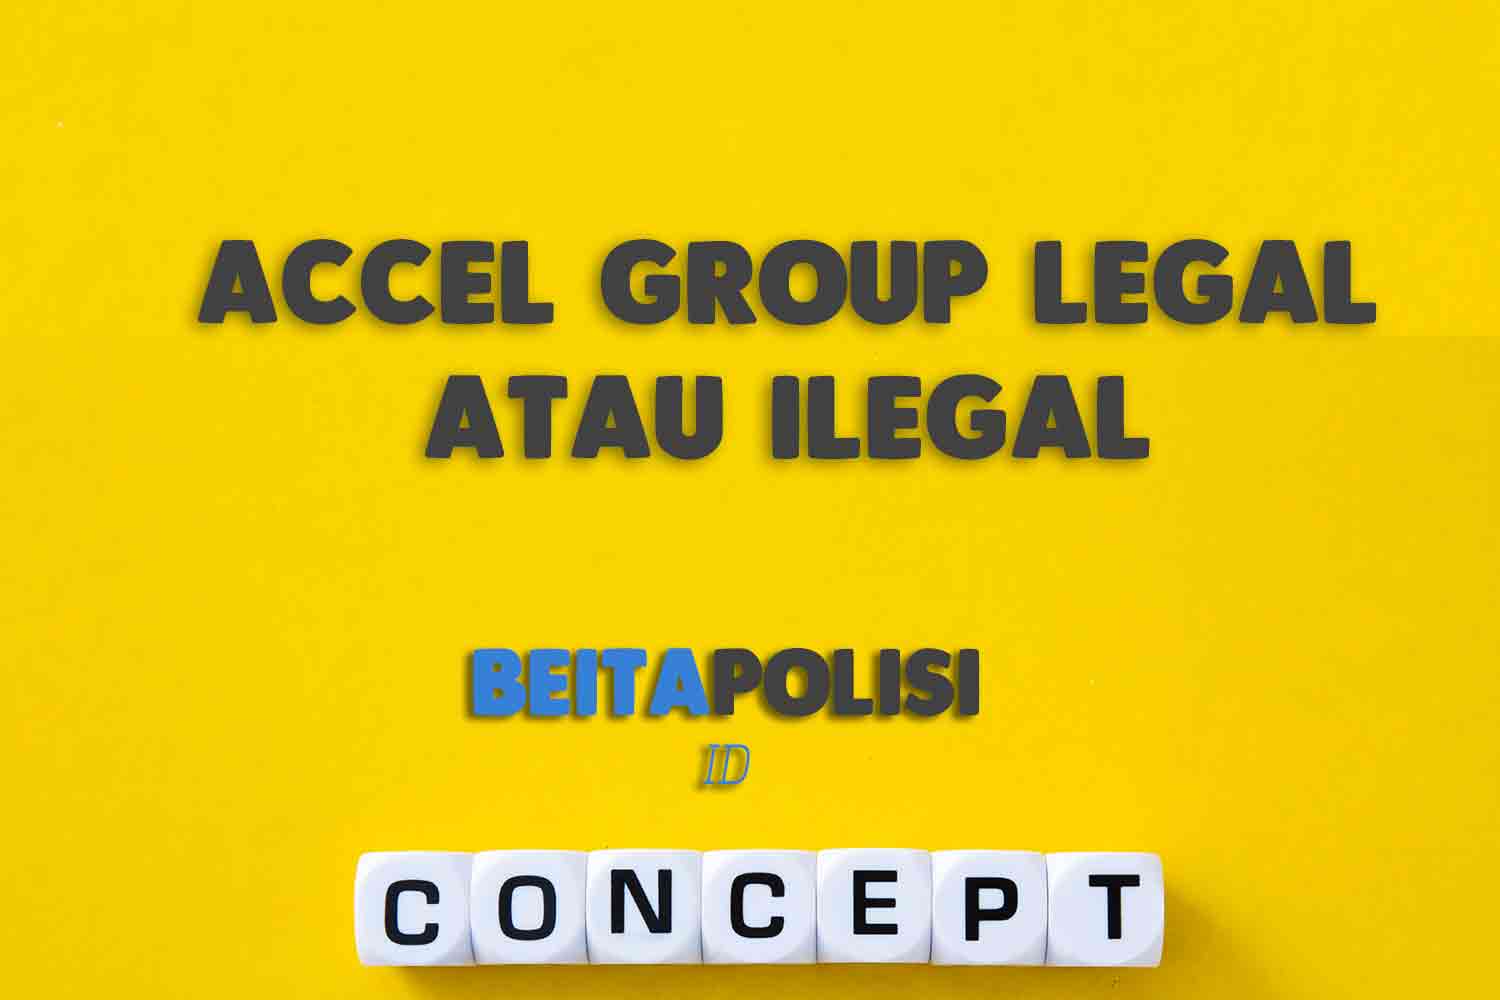 Surat Resmi Accel Group Legal Atau Ilegal